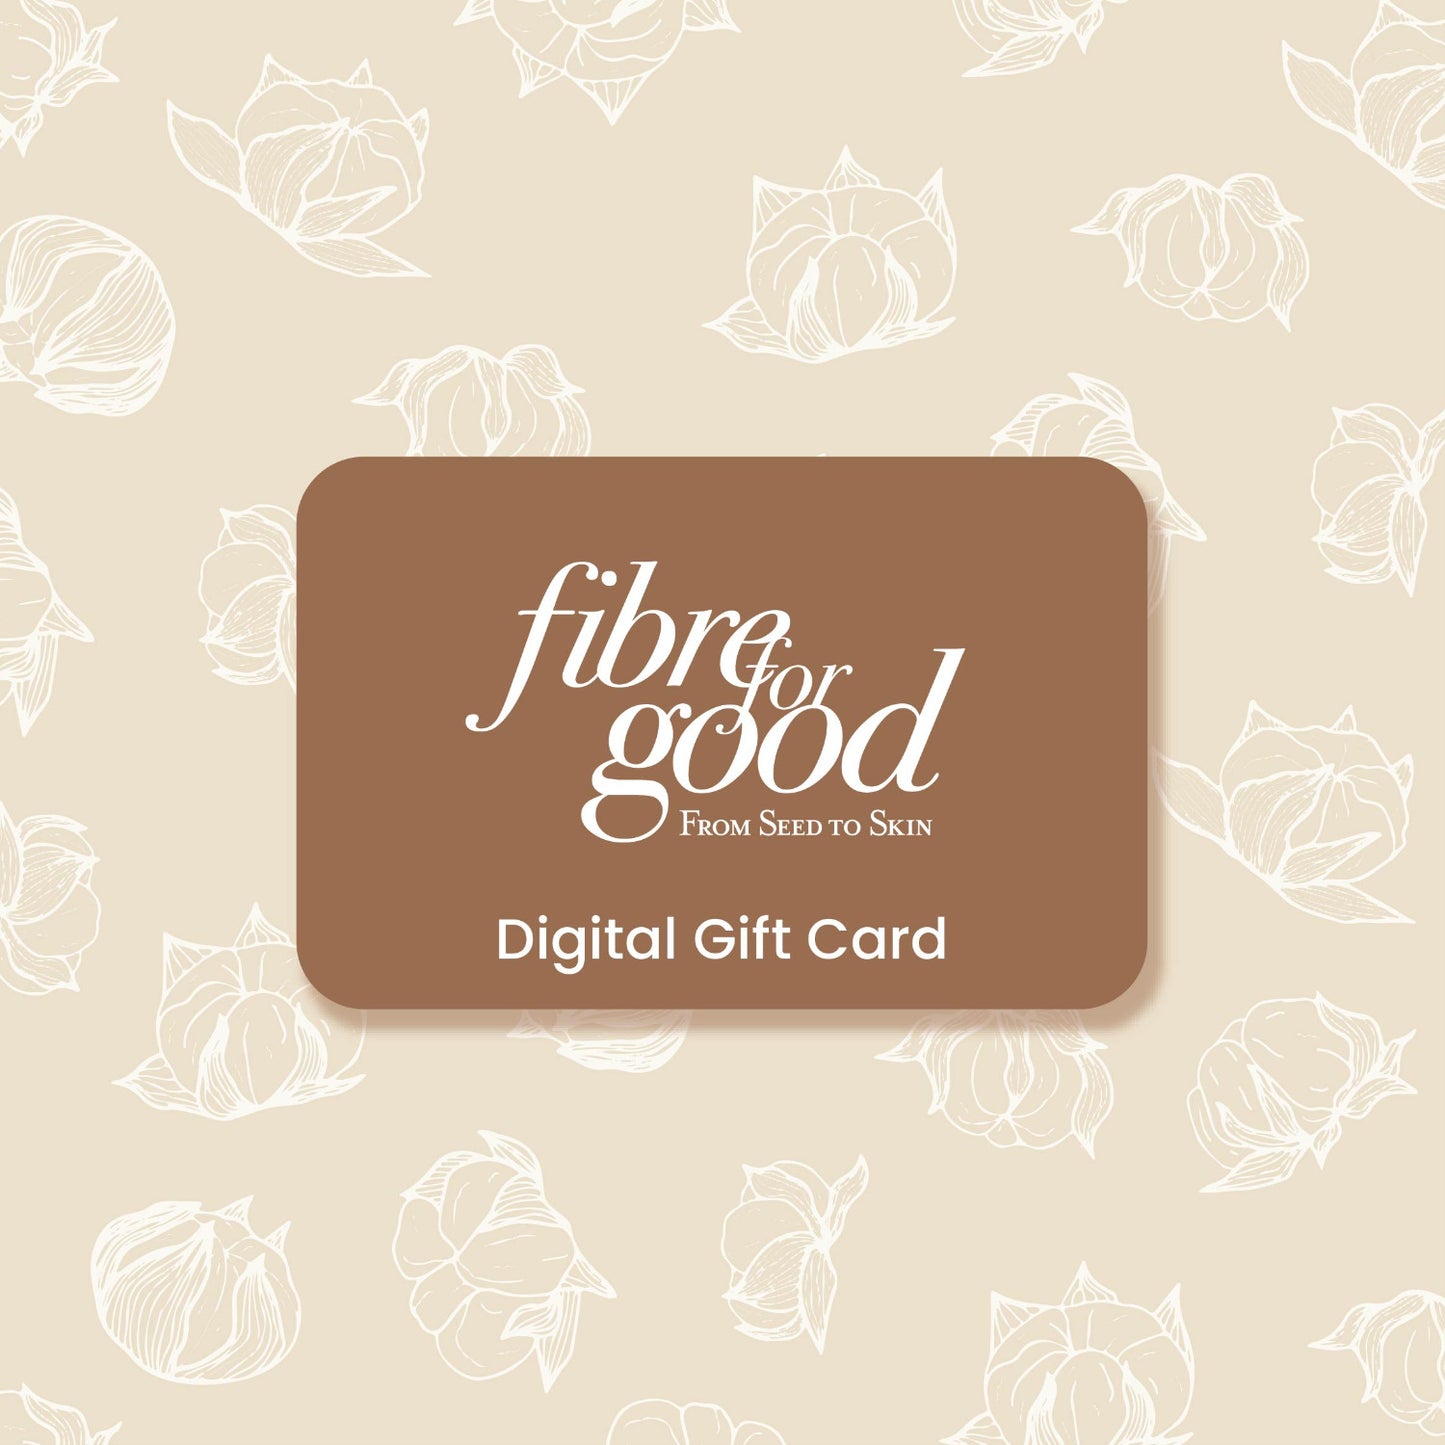 fibre for good, digital gift card